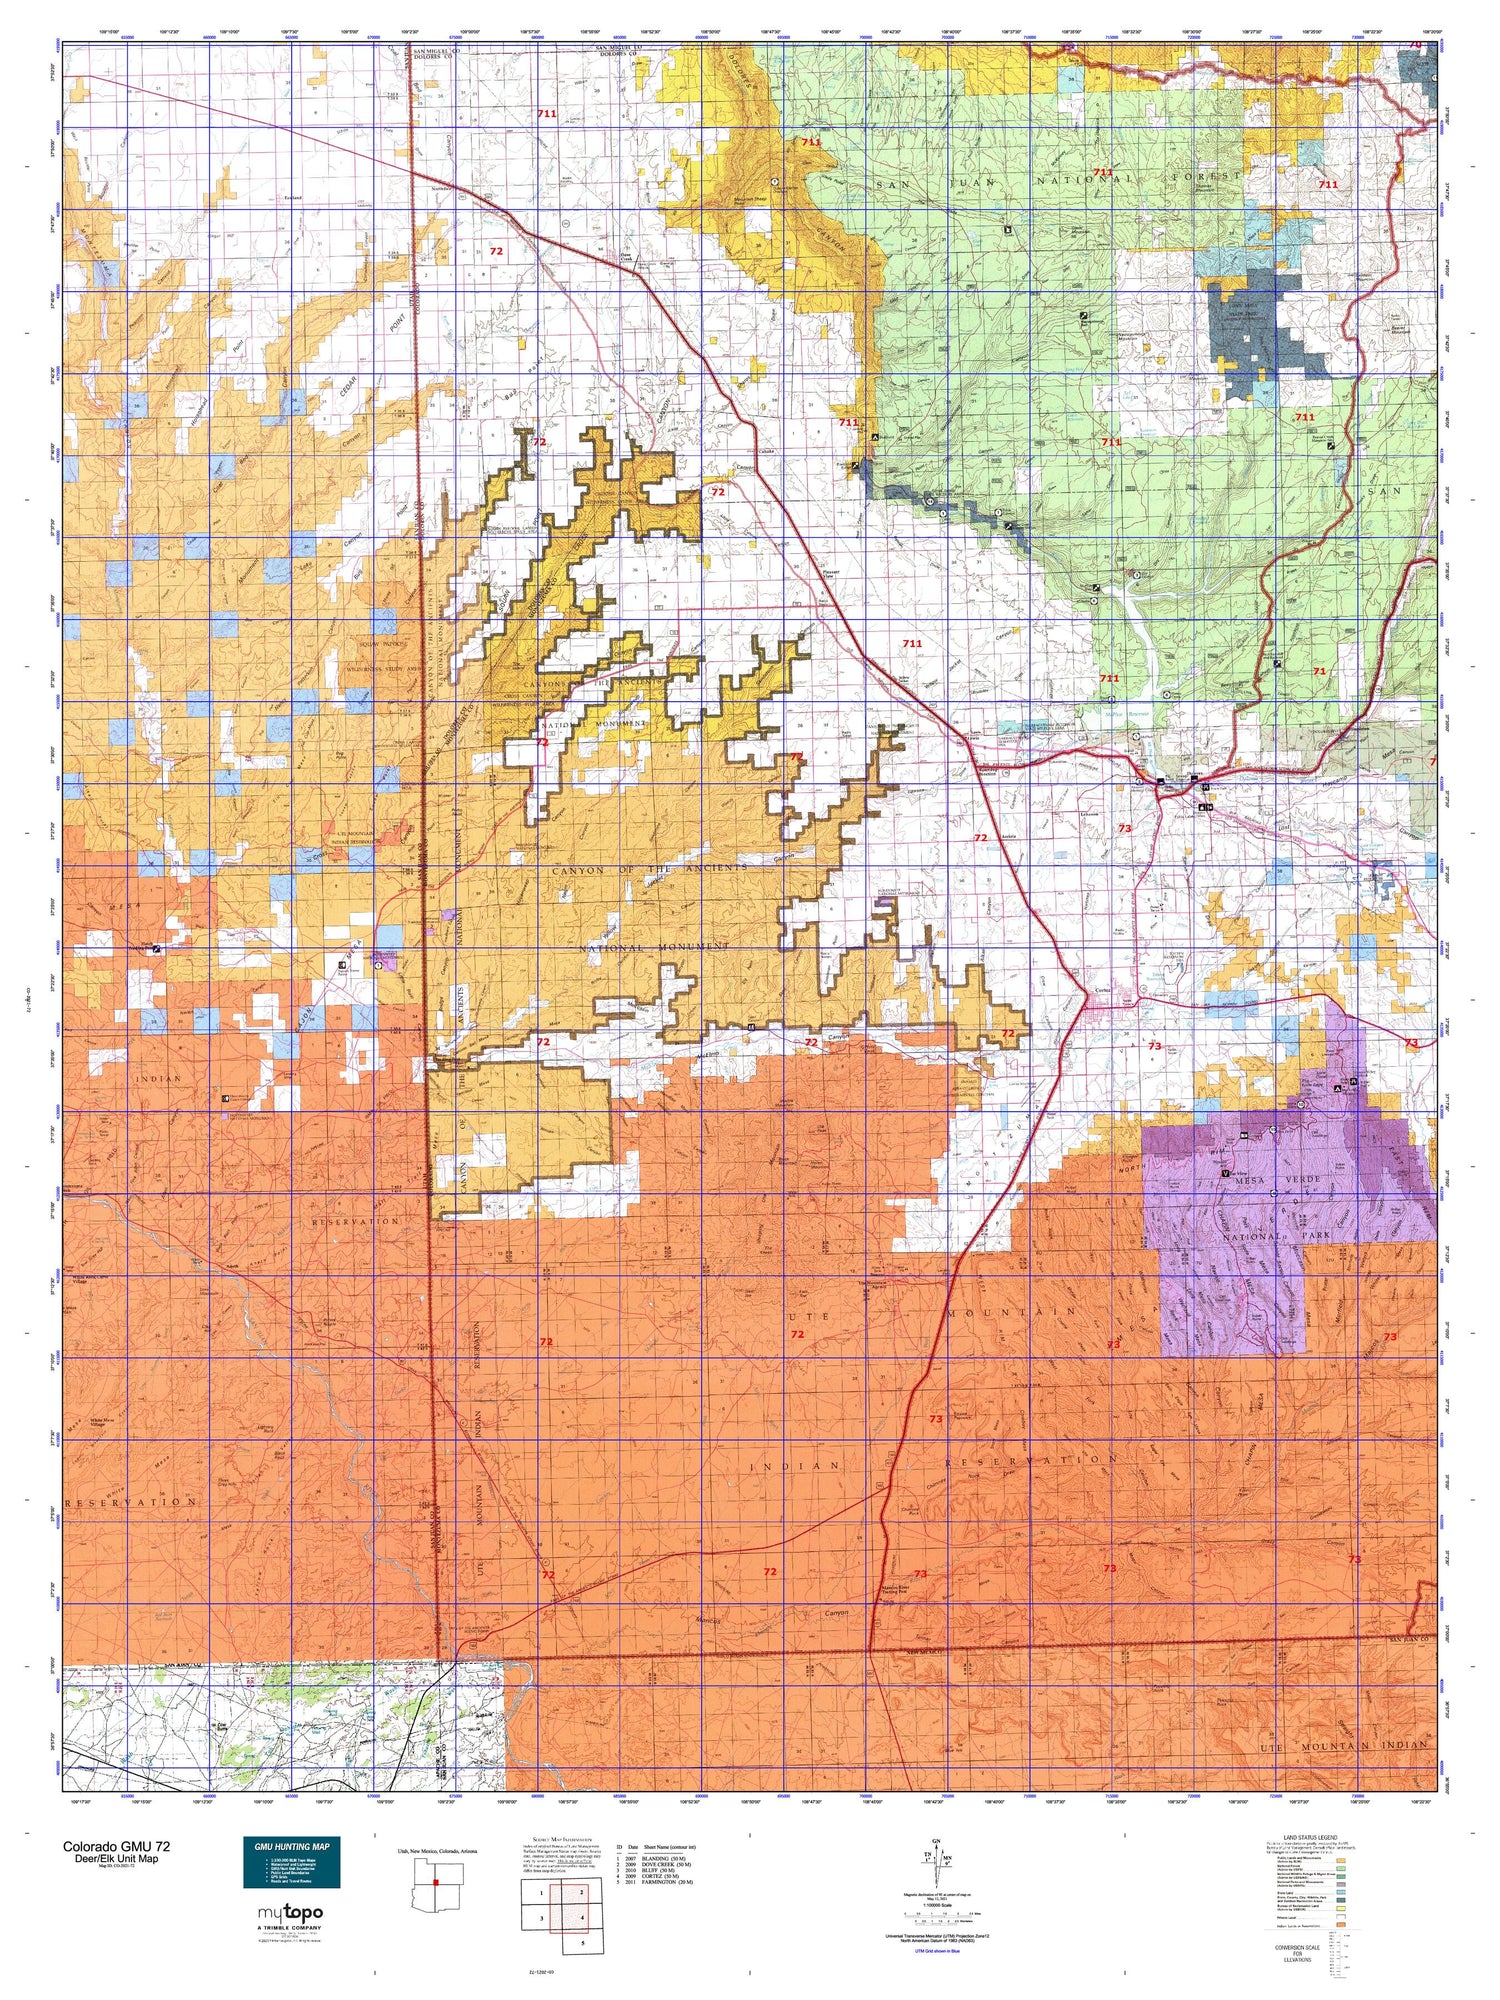 Colorado GMU 72 Map Image